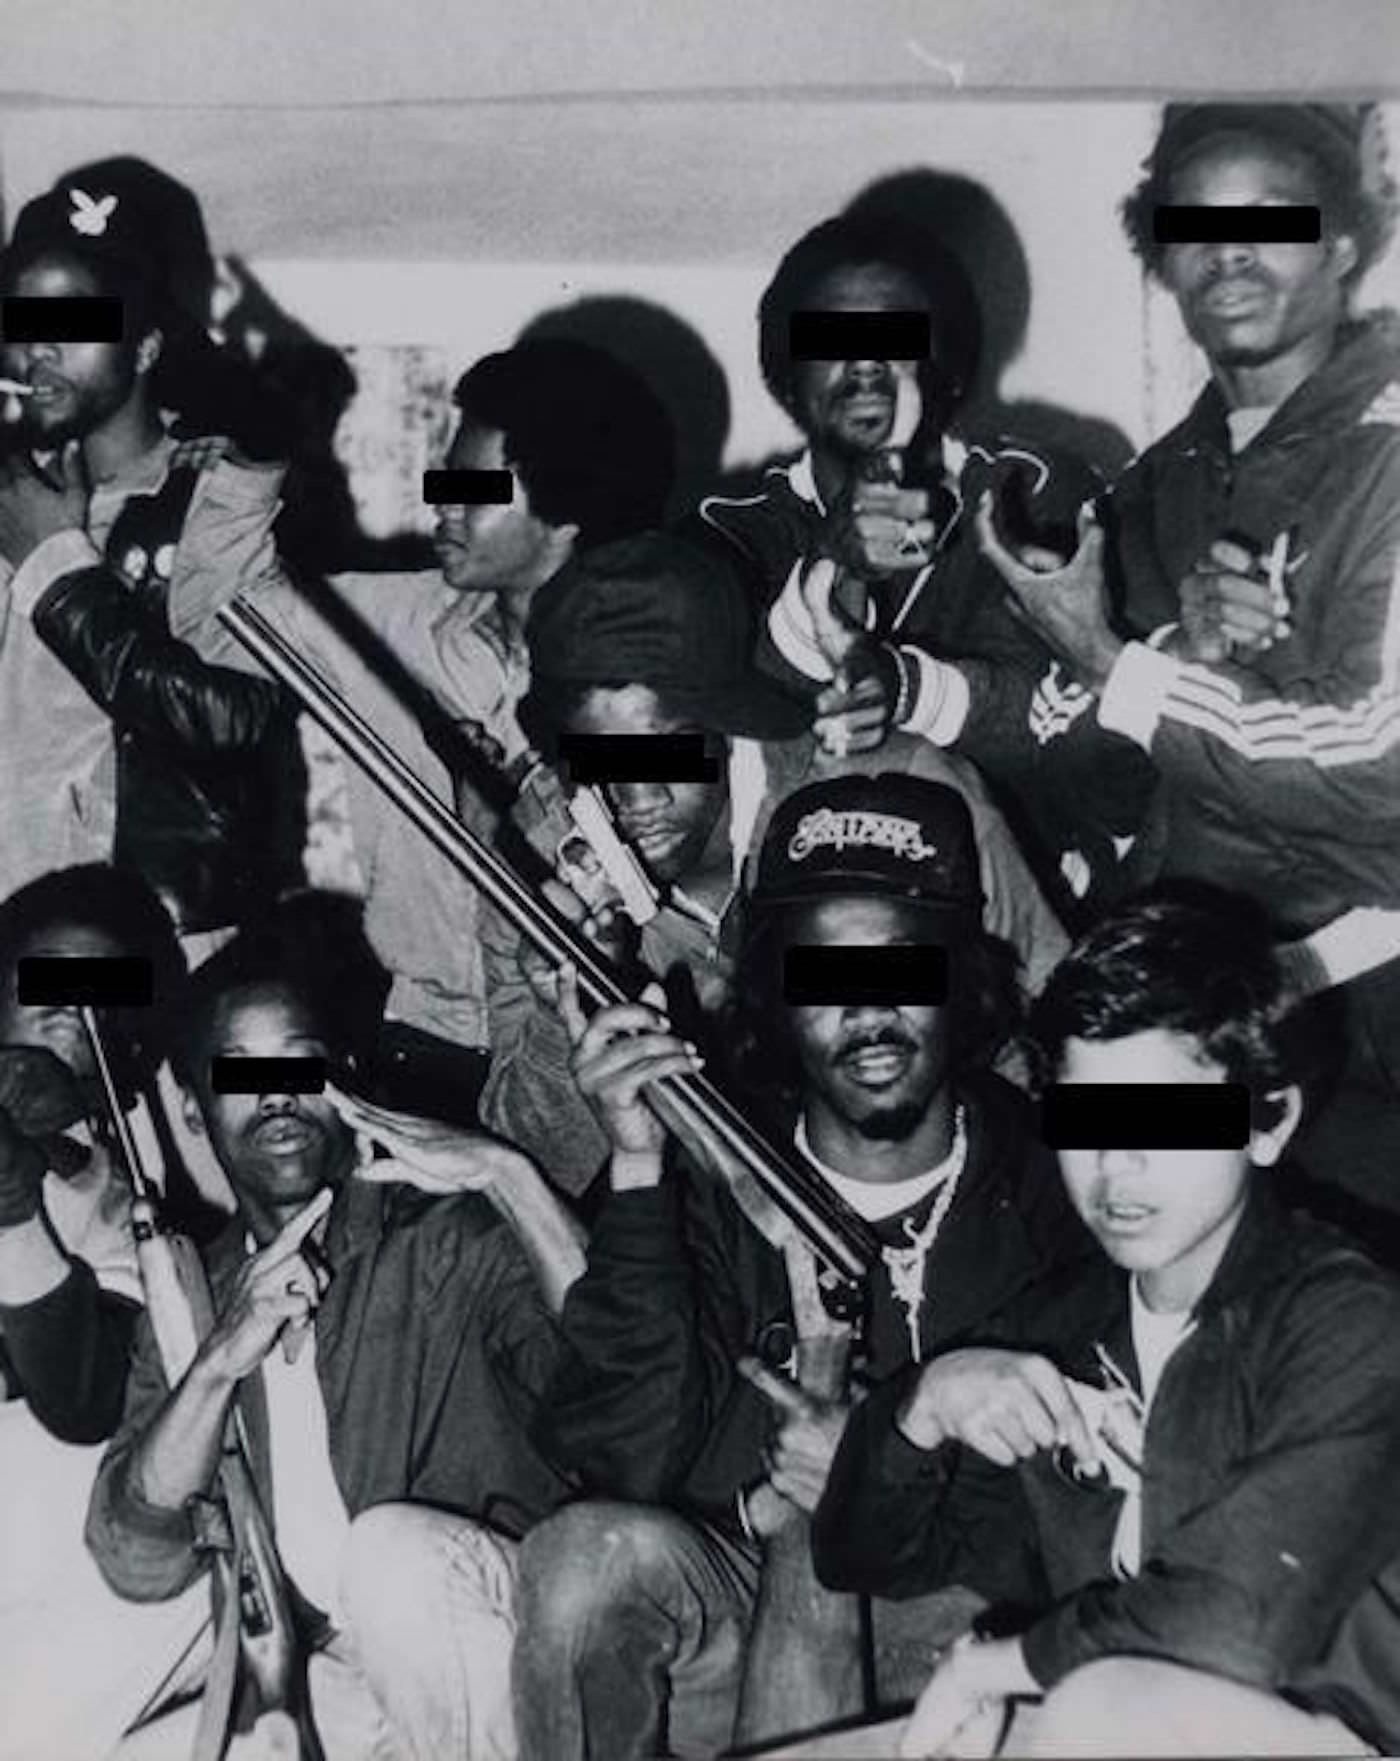 Hood niggas gang hostr